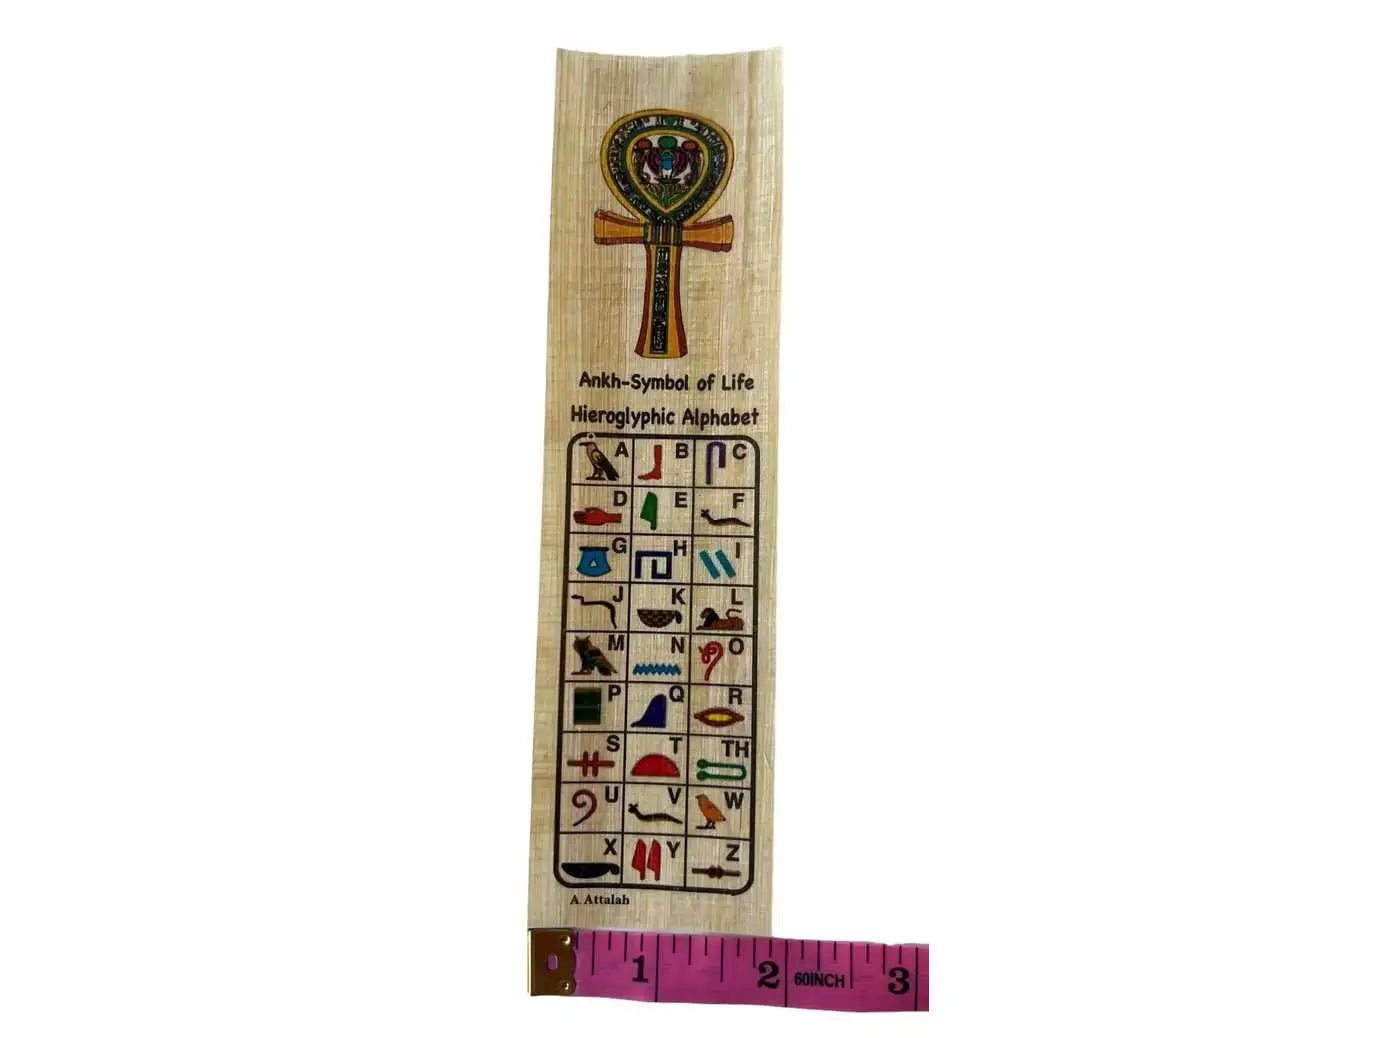 Zodiac - Hieroglyphic Alphabet Papyrus Paper - Egyptian Papyrus Bookmark History Educational